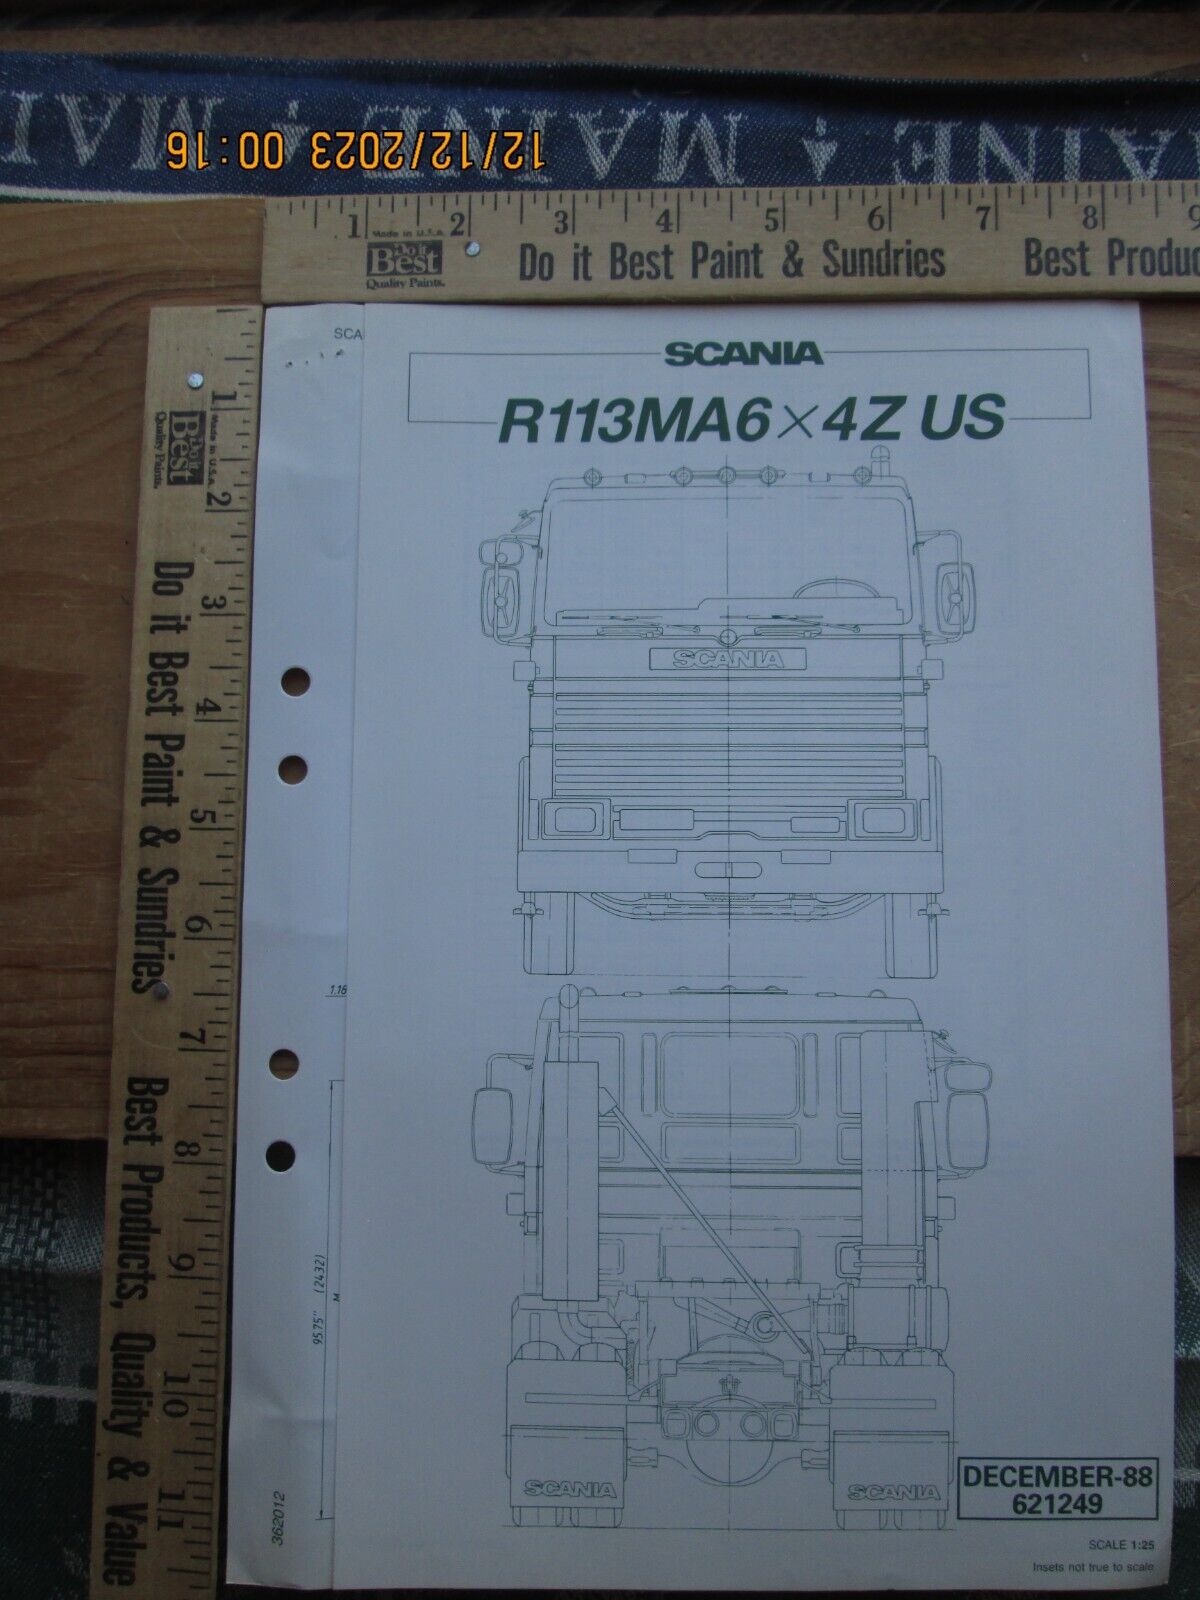 scania model r113ma6 6x4z us Dimensional drawings details 1988